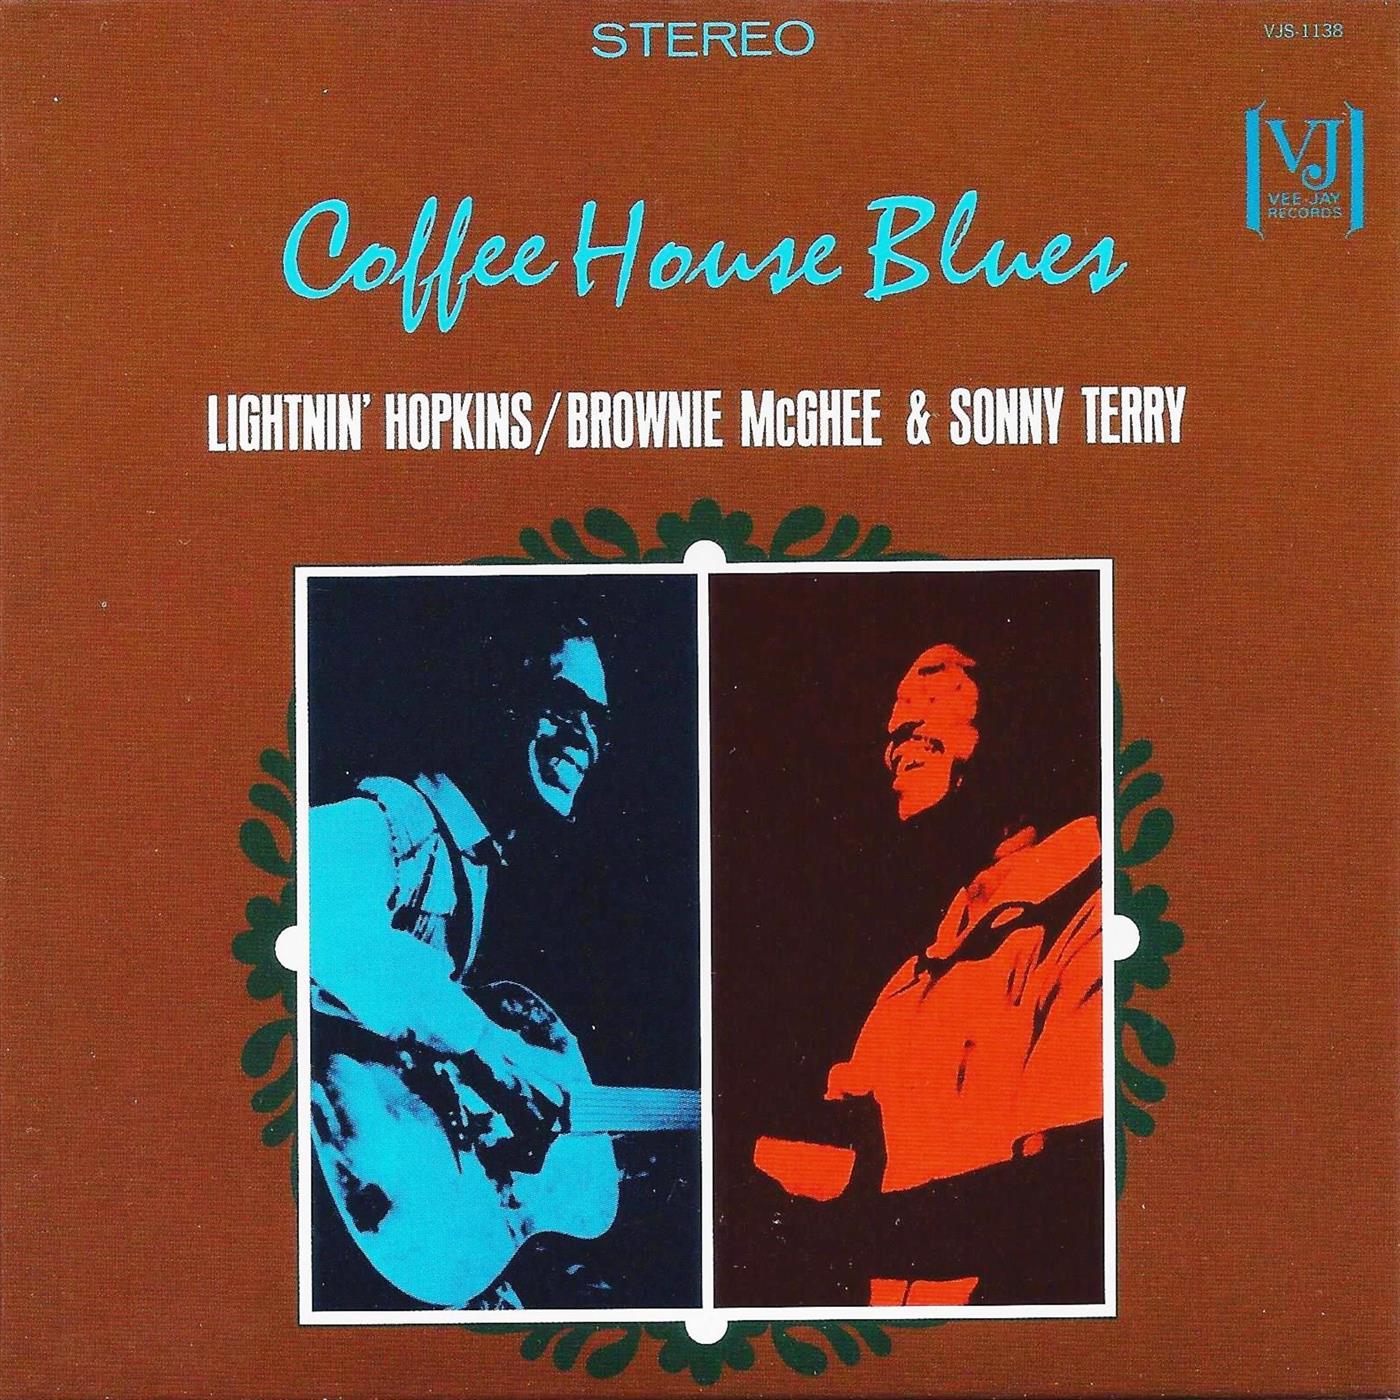 Coffee House Blues